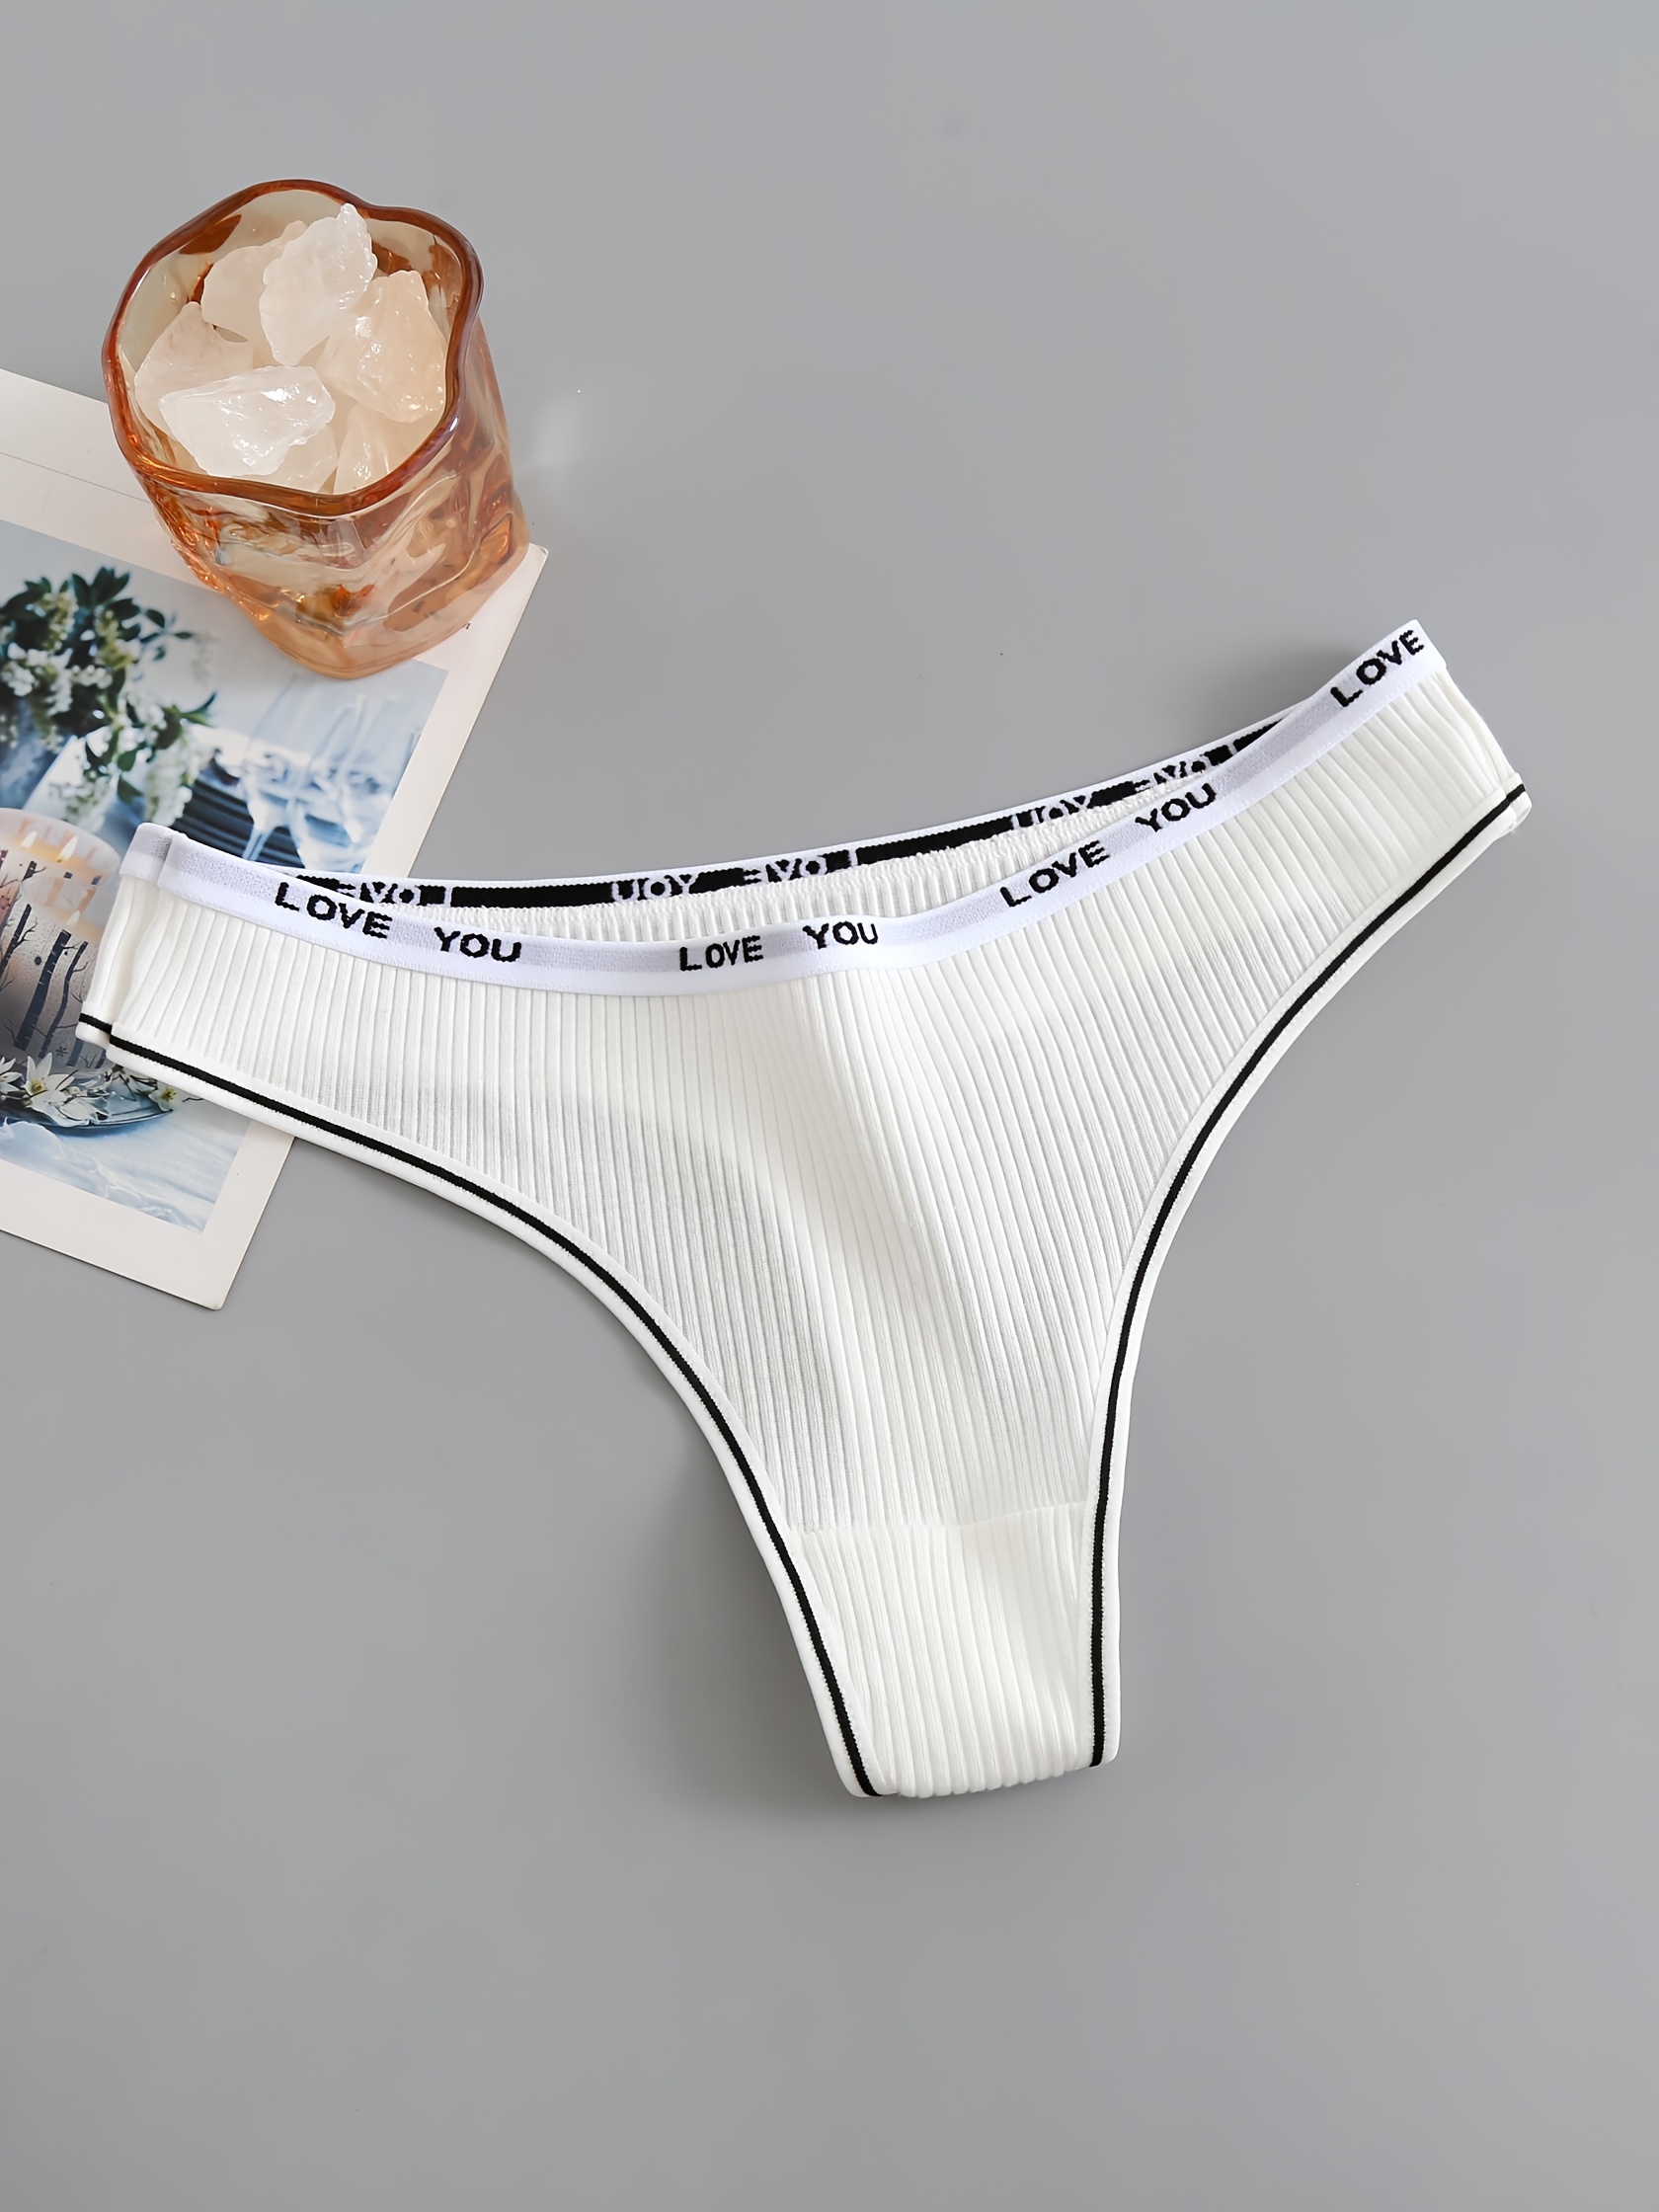 6 Pcs Seamless Sports Thongs, Comfy Low Waist Letter Print Thong Intimates  Panties, Women's Lingerie & Underwear